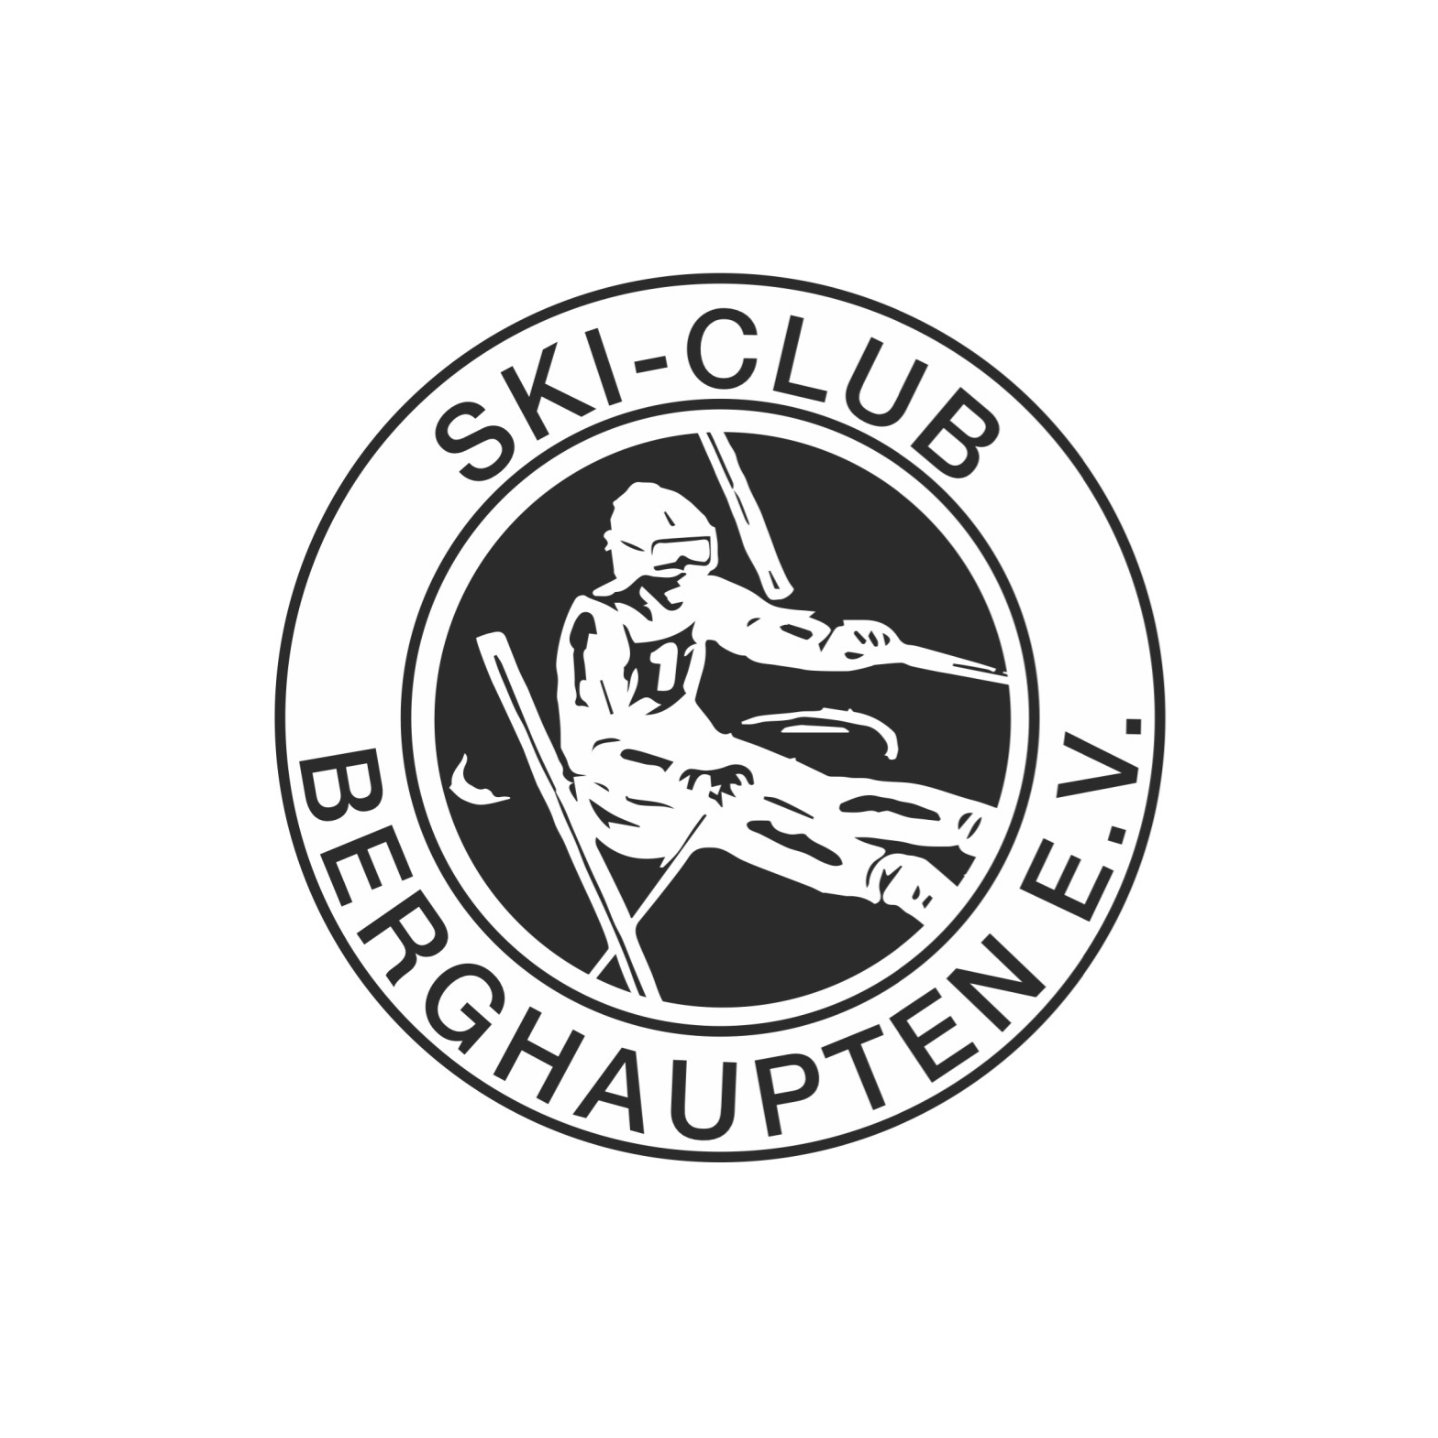 Skiclub Berghaupten / Urheber: Skiclub Berghaupten